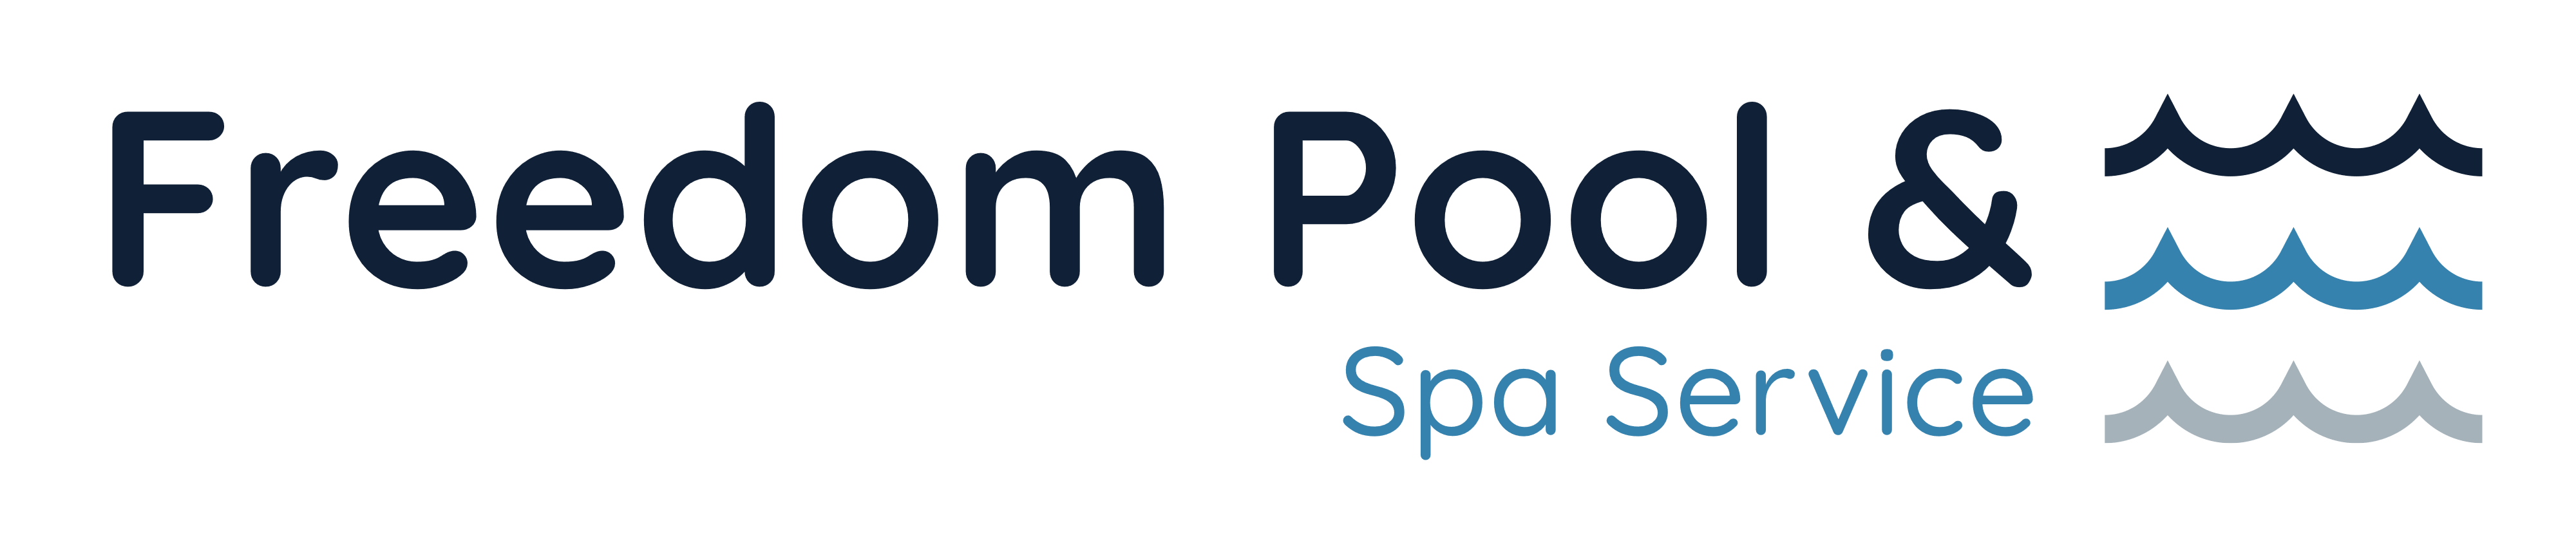 Freedom Pool & Spa Service Logo